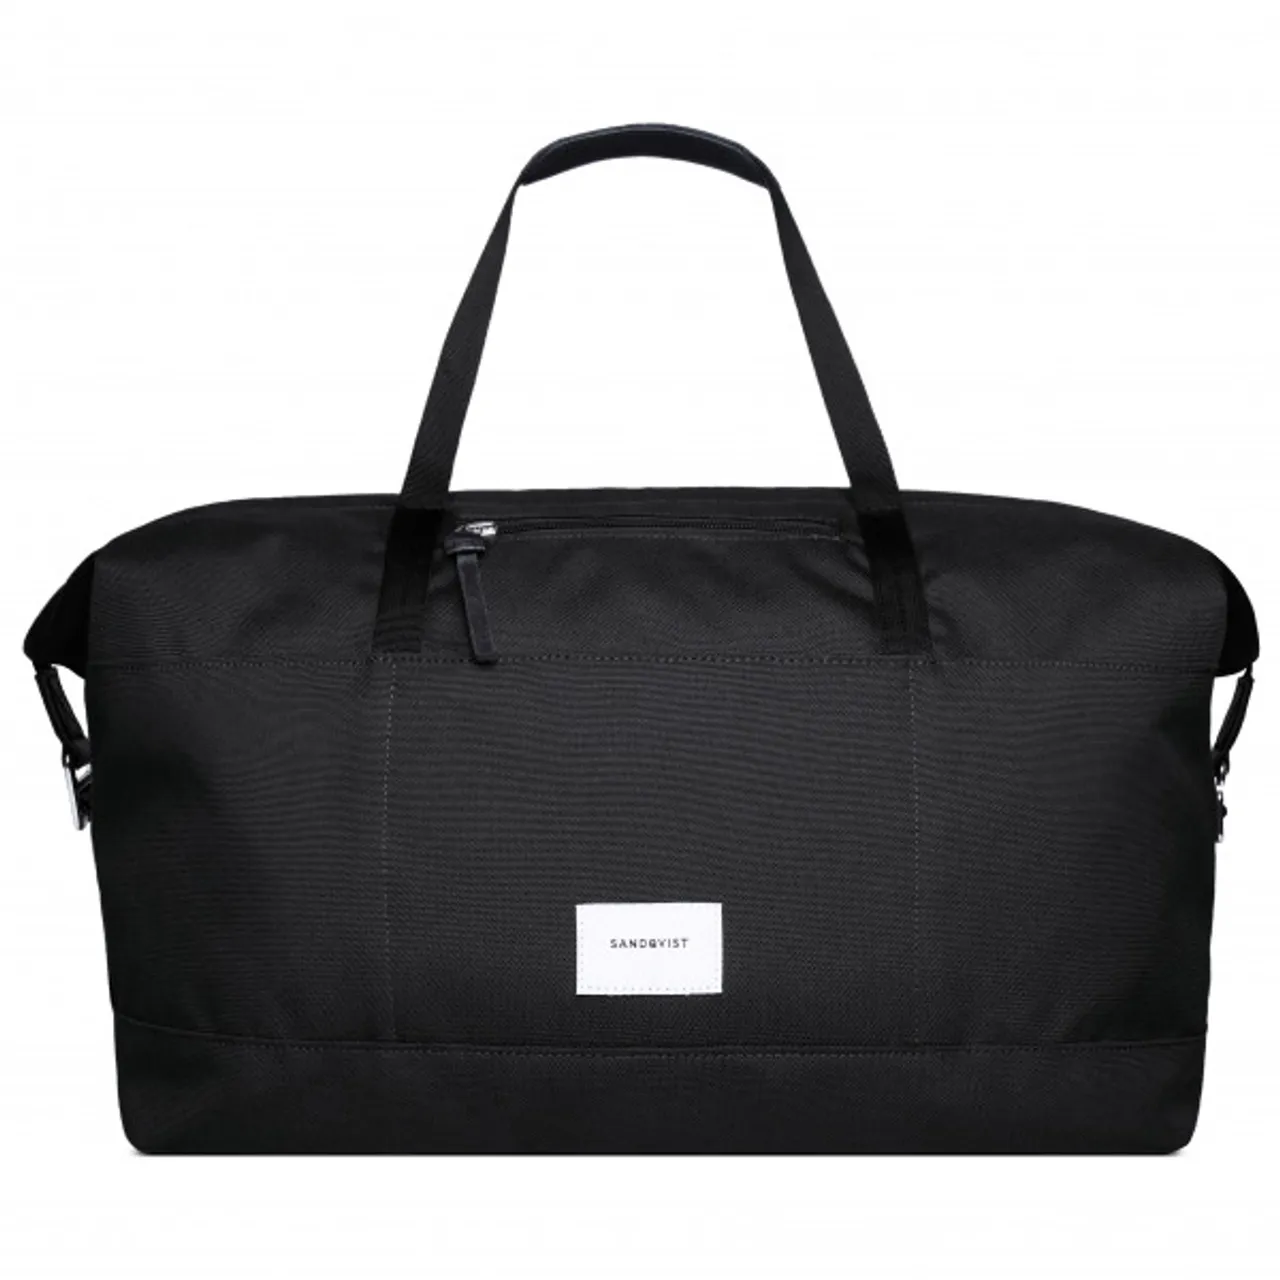 Sandqvist - Milton 30 - Luggage size 30 l, black